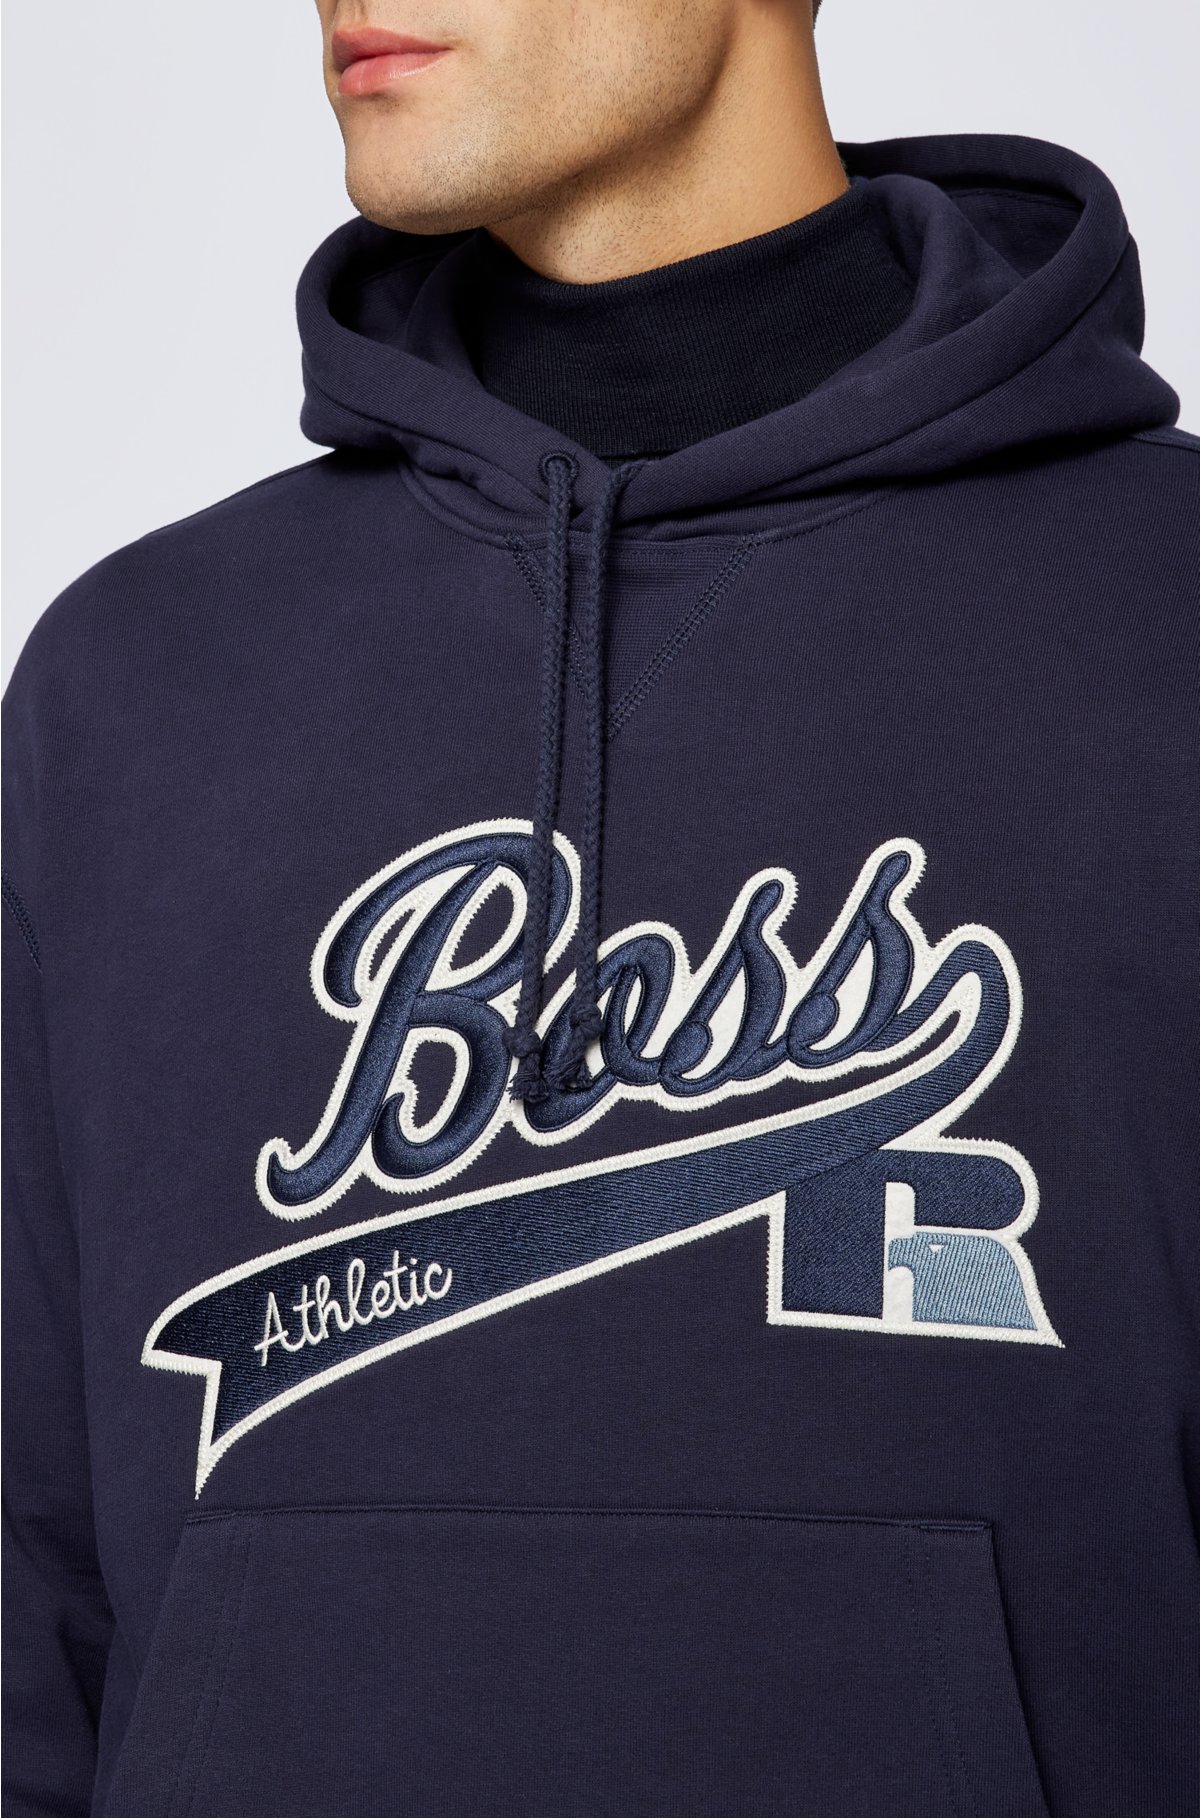 Hugo Boss, Shirts, Hugo Boss X Russell Athletics Hoodie Size Xl